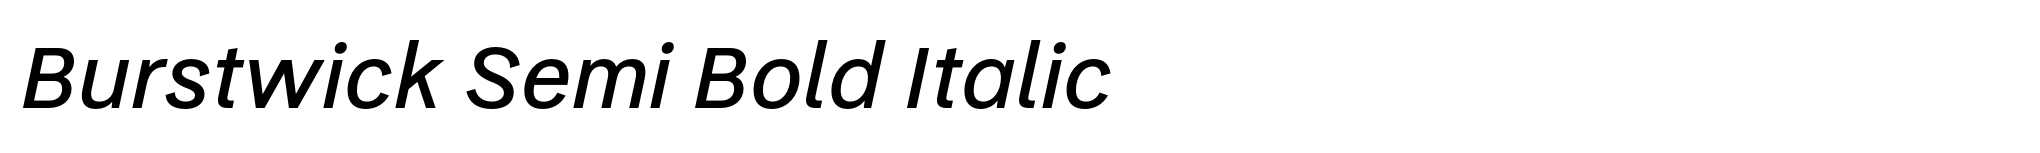 Burstwick Semi Bold Italic image